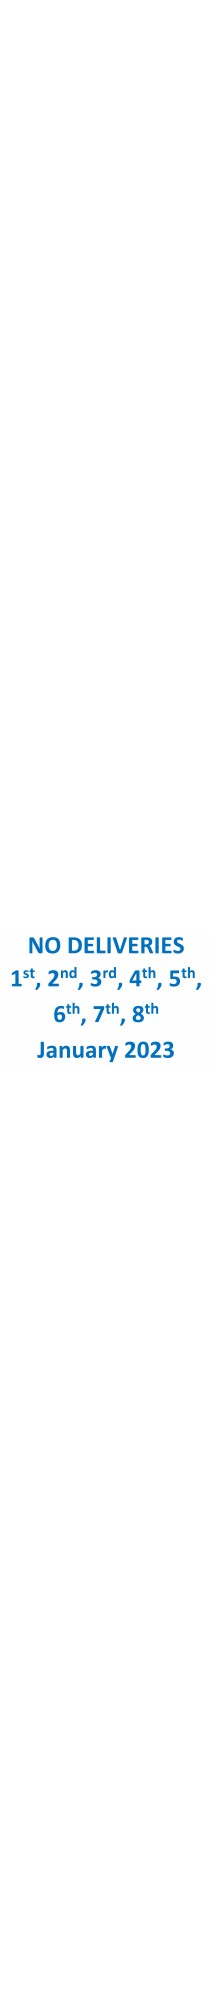 No Deliveries Jan